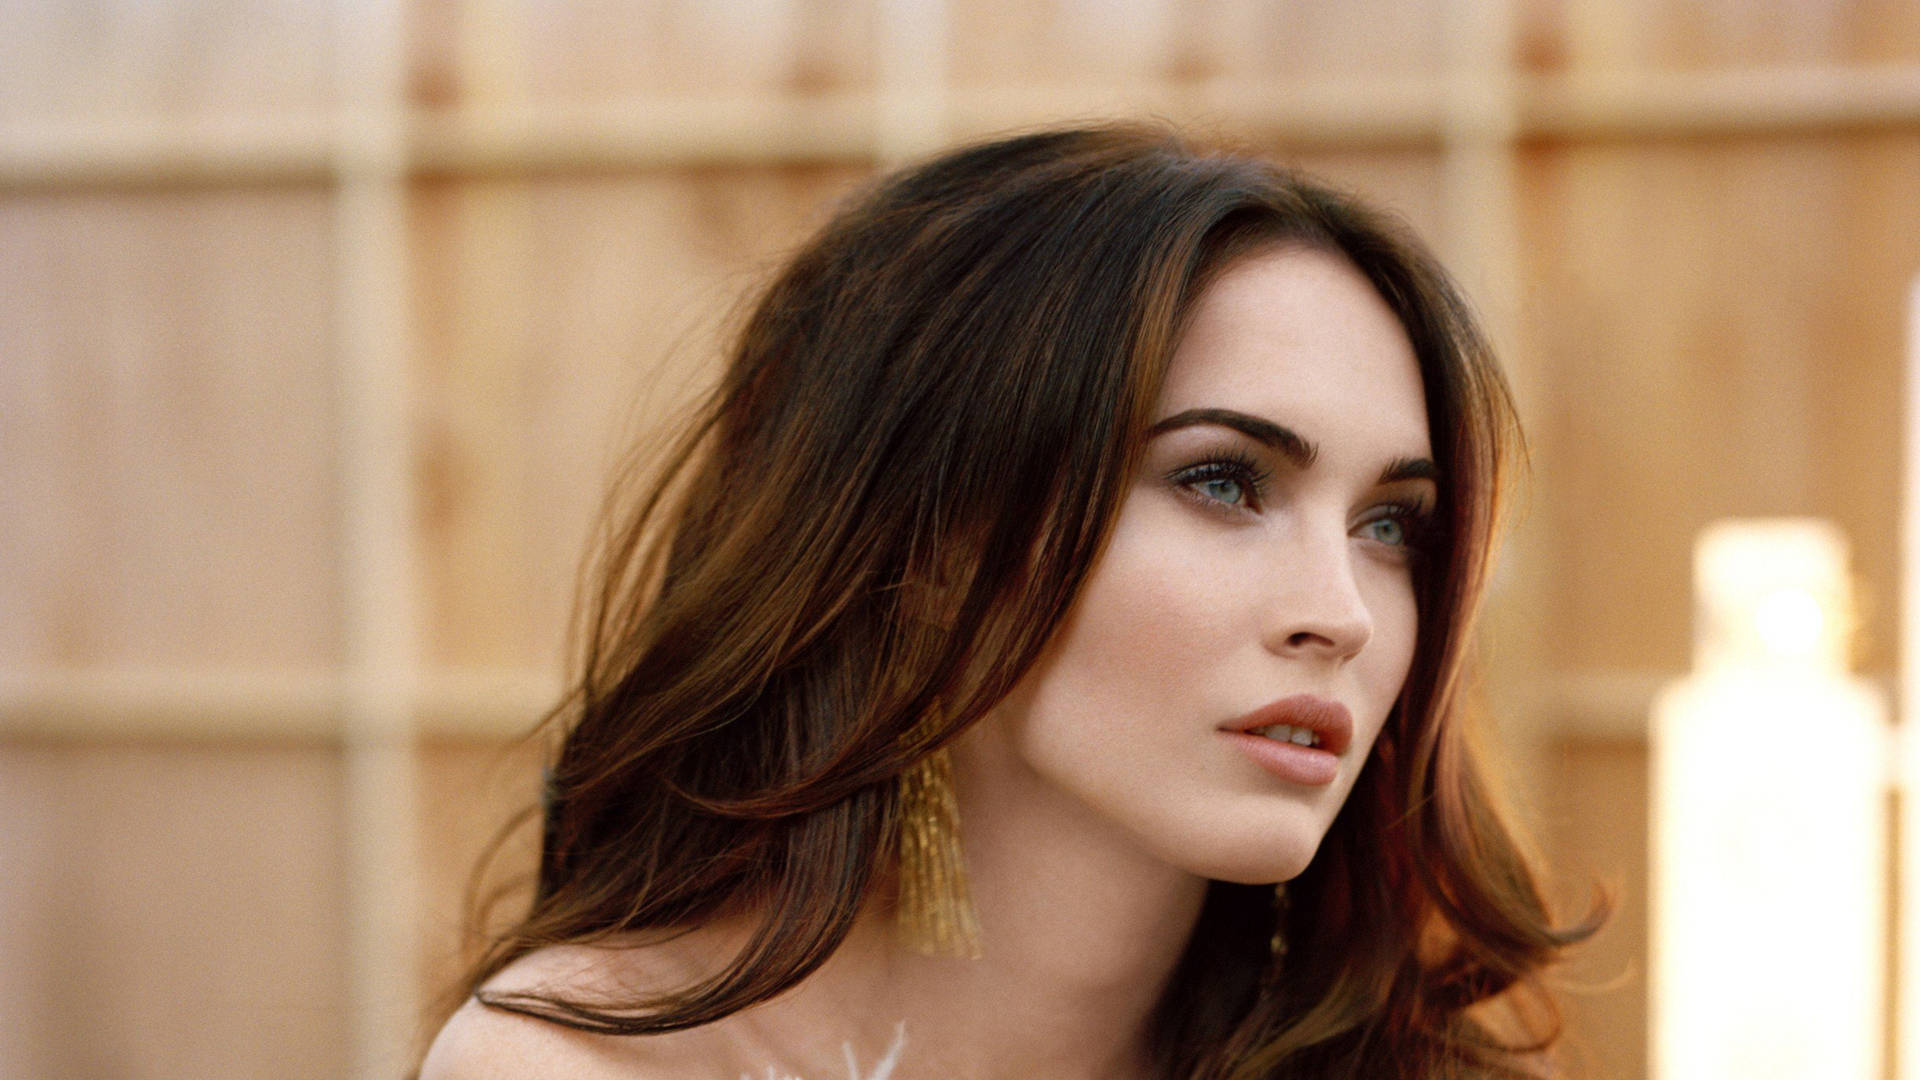 Megan Fox Looking Stunning In Beautiful Gold Earrings